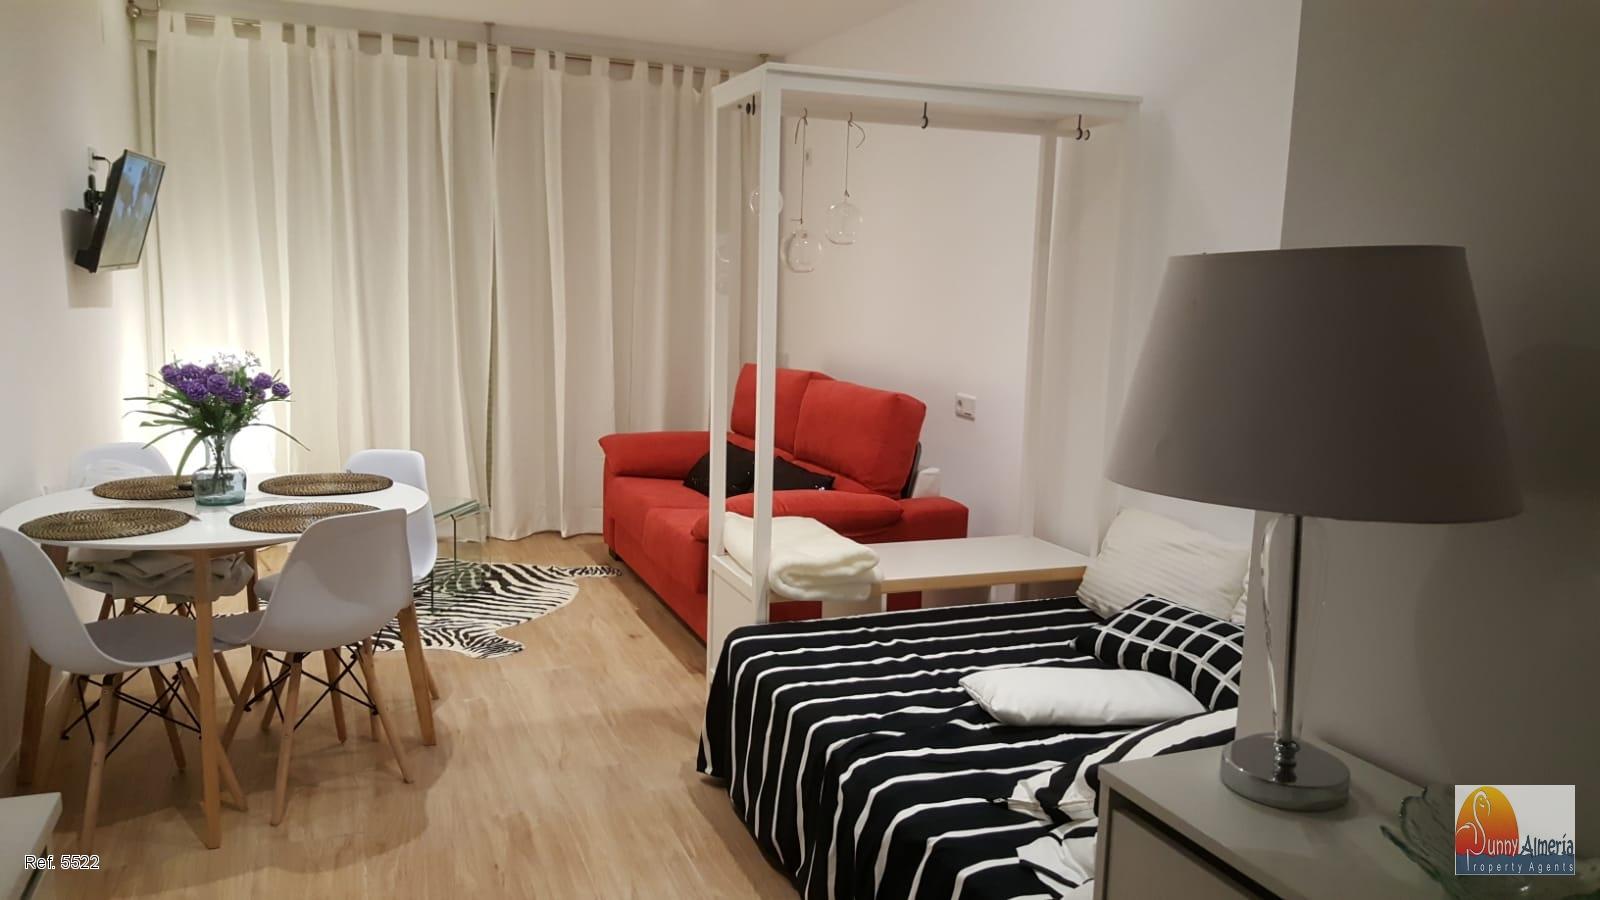 Studio Flat for rent in Avenida las Gaviotas   19 (Roquetas de Mar), 450 €/month